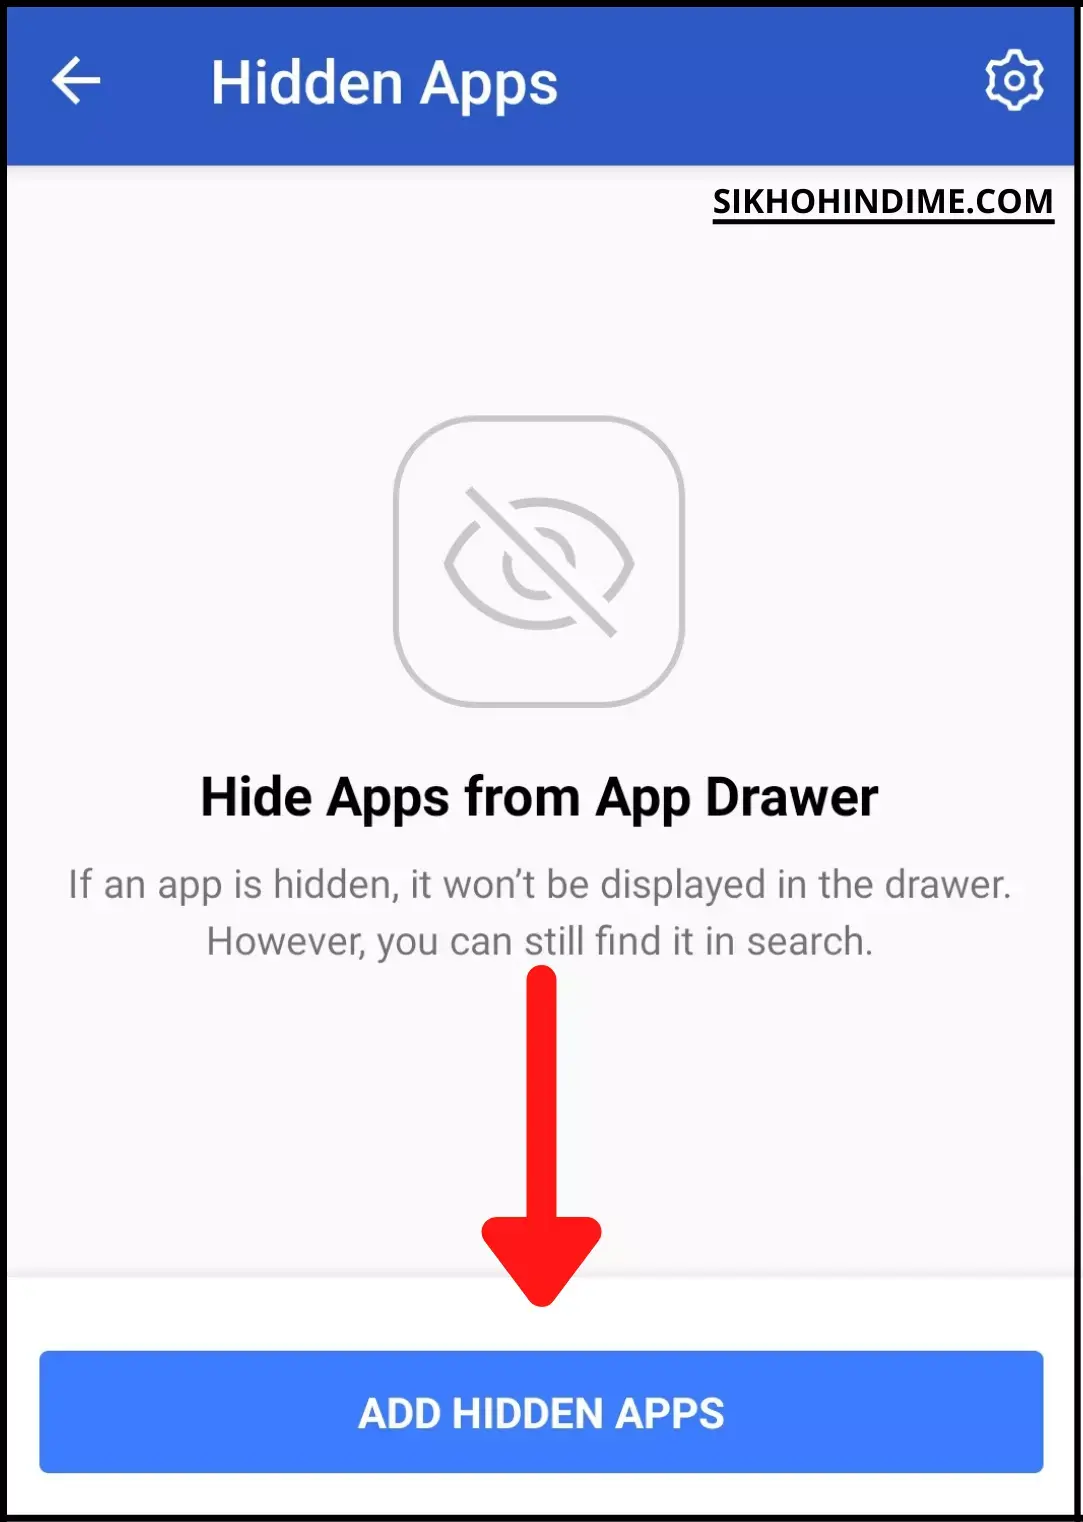 Click on Add Hidden Apps